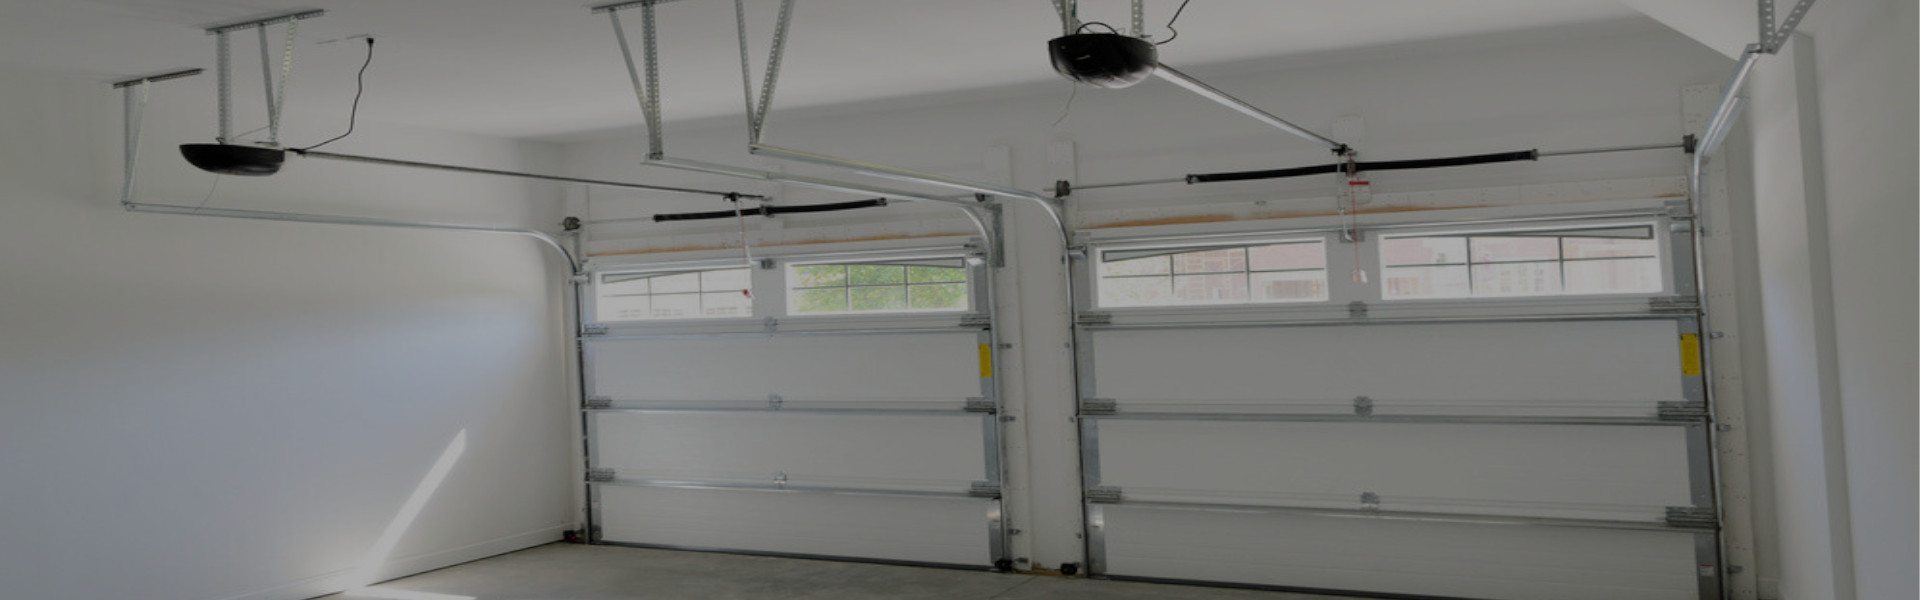 Slider Garage Door Repair, Glaziers in Streatham, SW16